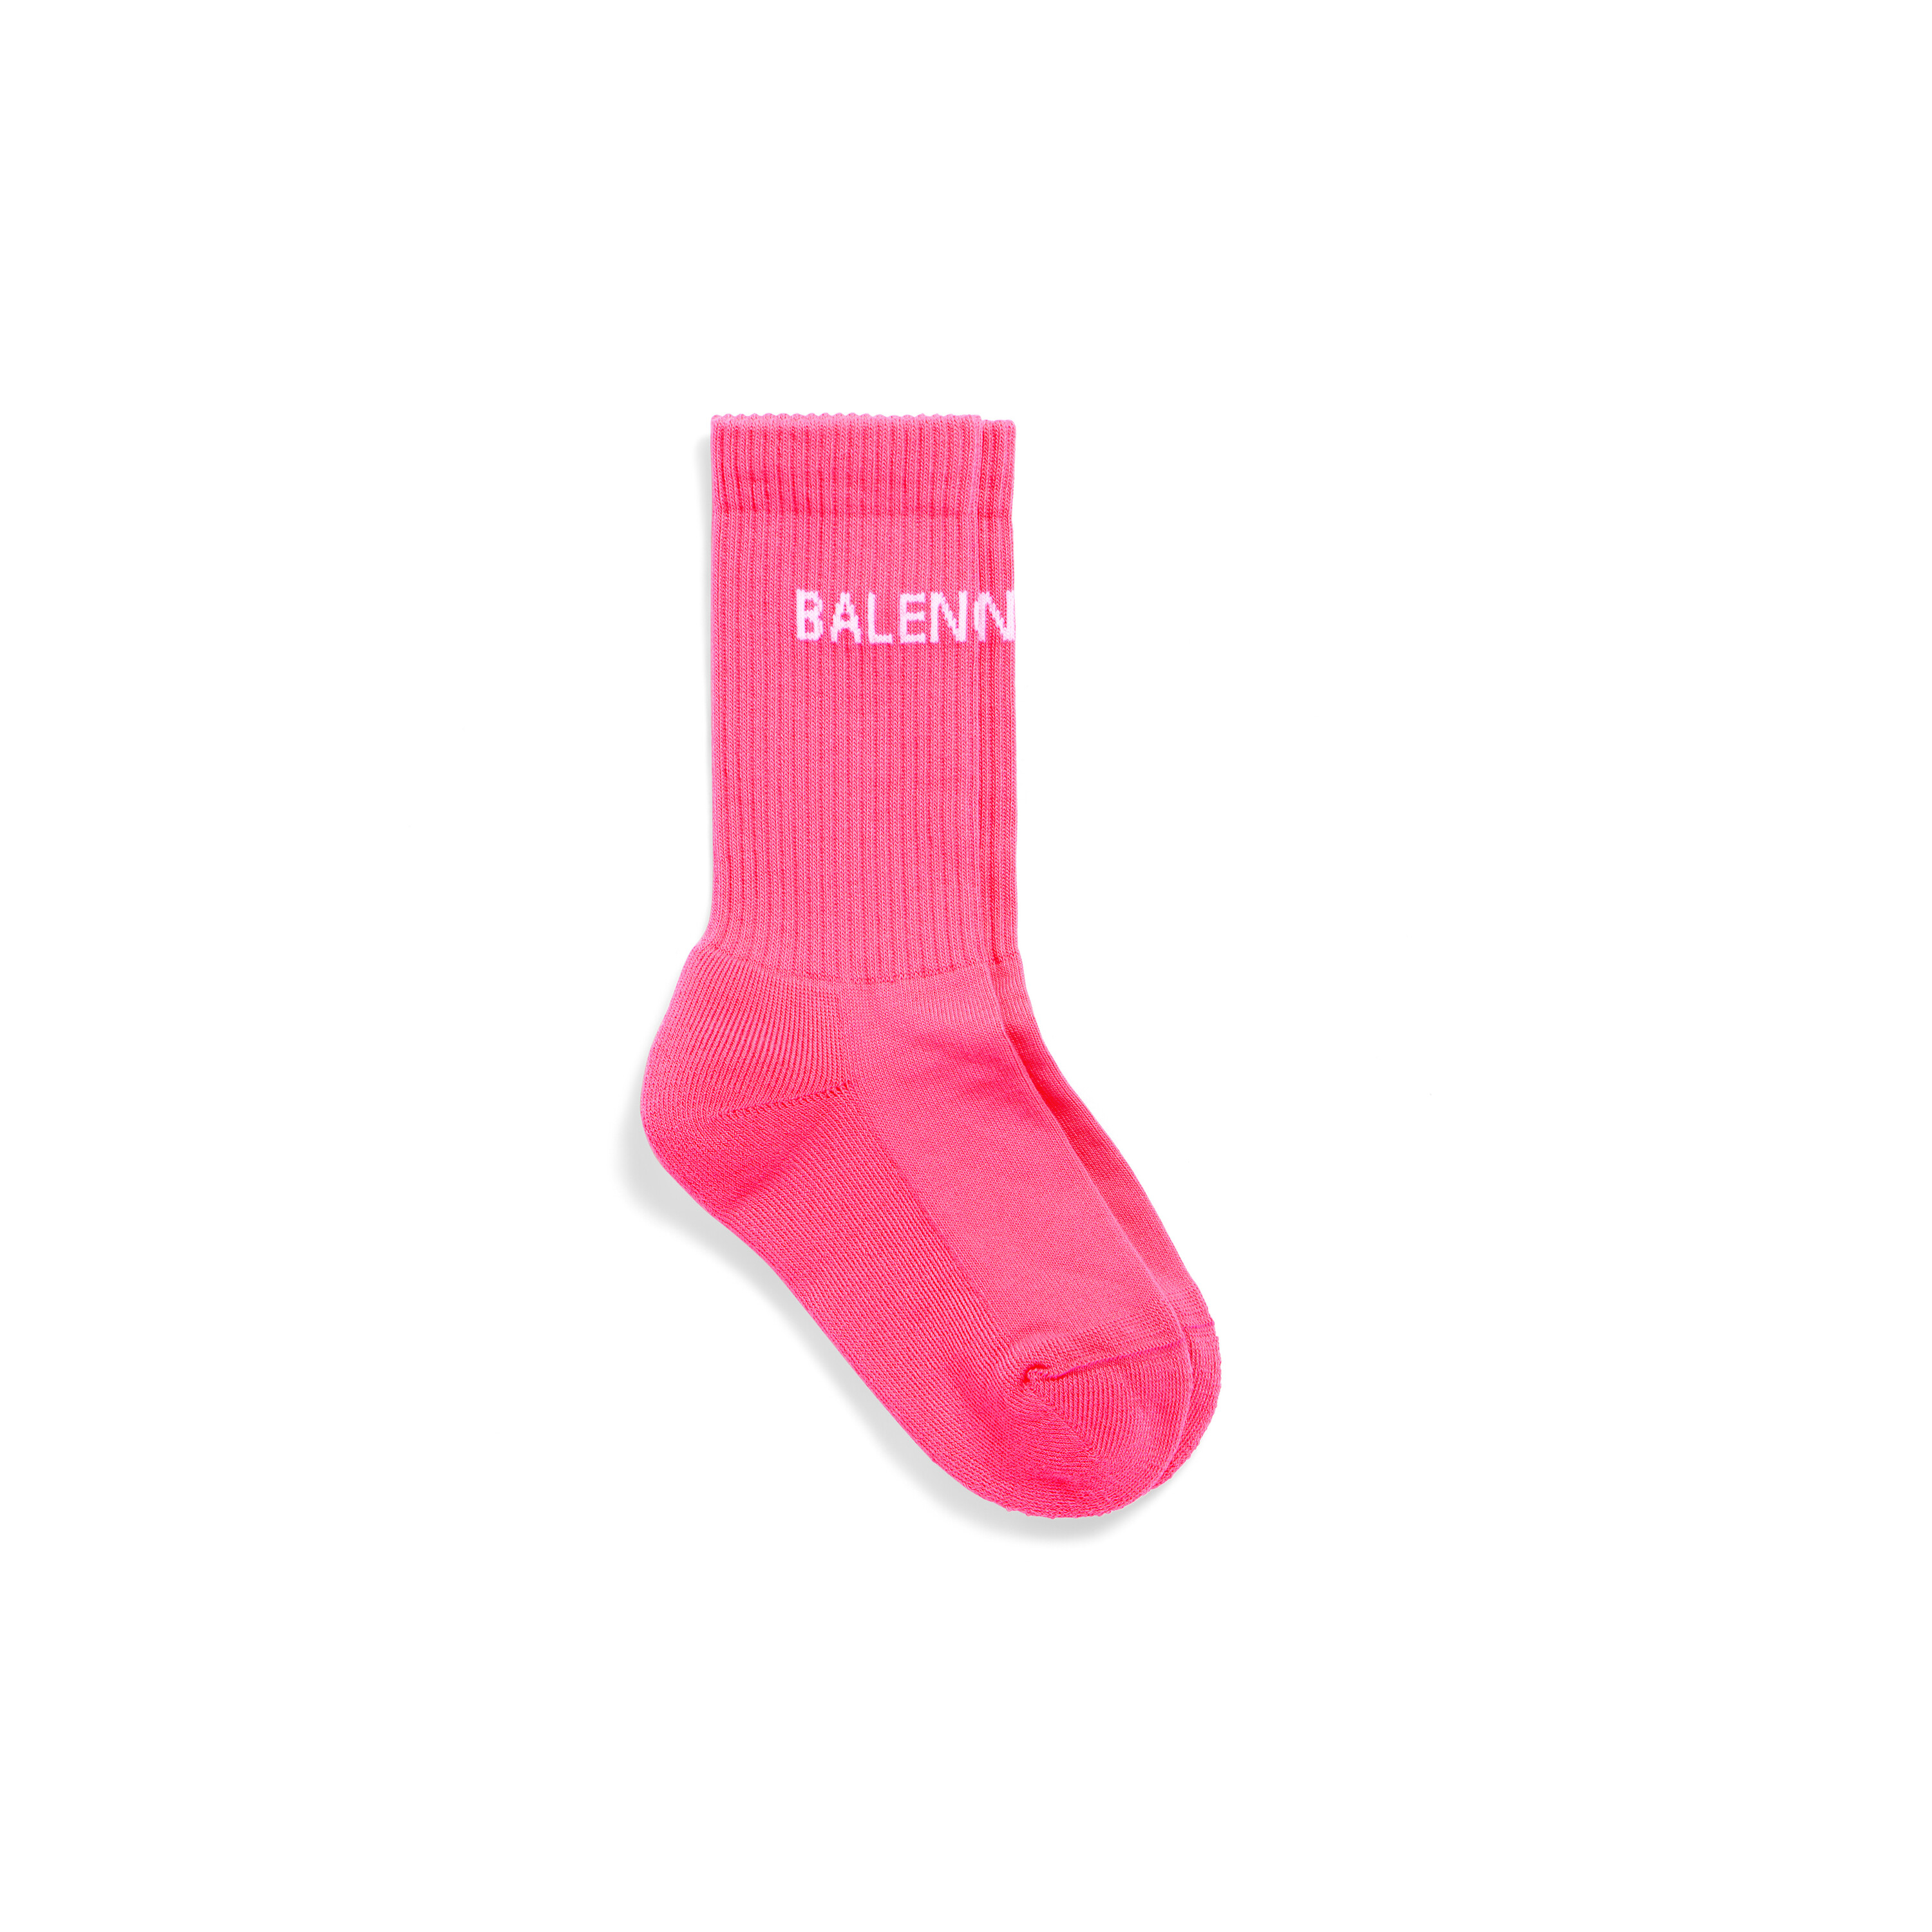 Situation vandrerhjemmet gavnlig Women's Balenciaga Tennis Socks in Bright Pink | Balenciaga US